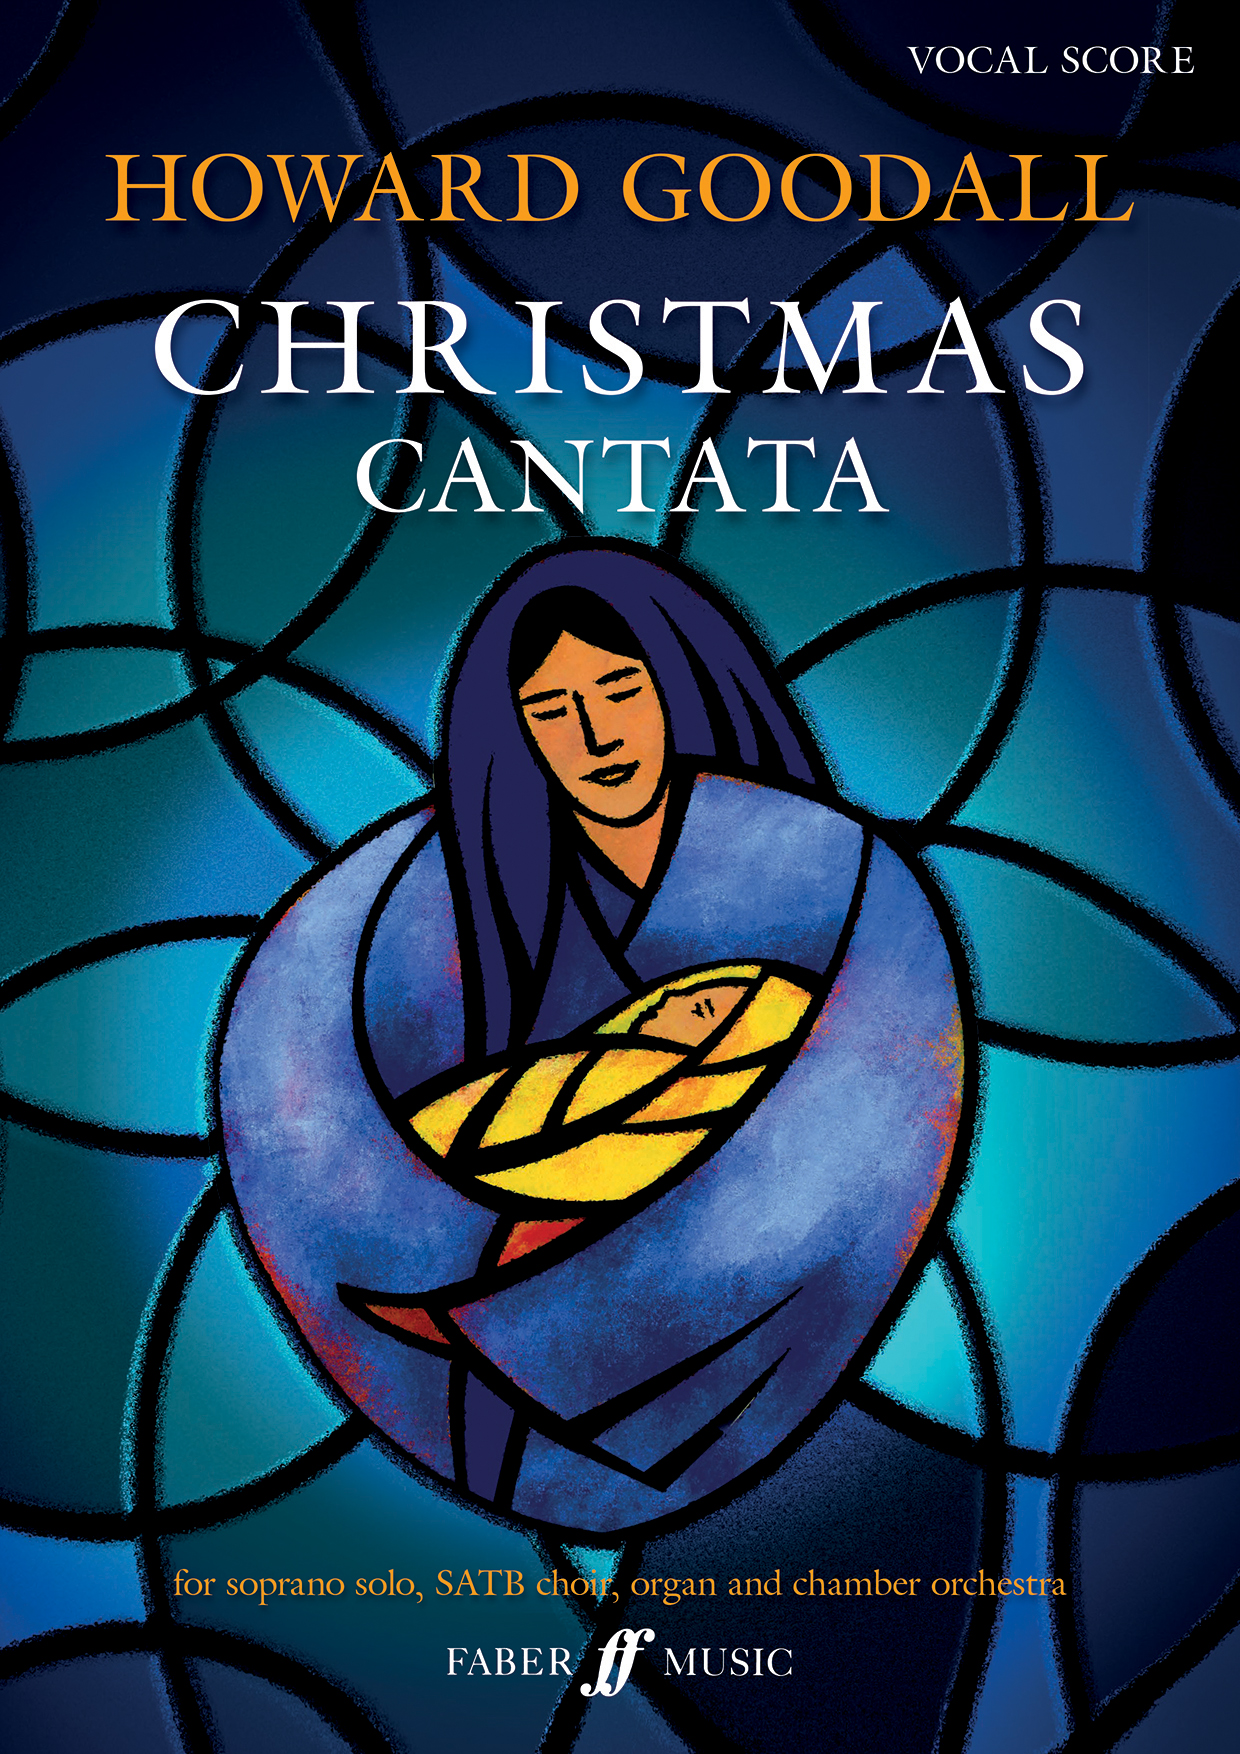 Goodall Christmas Cantata Vocal Score Sheet Music Songbook